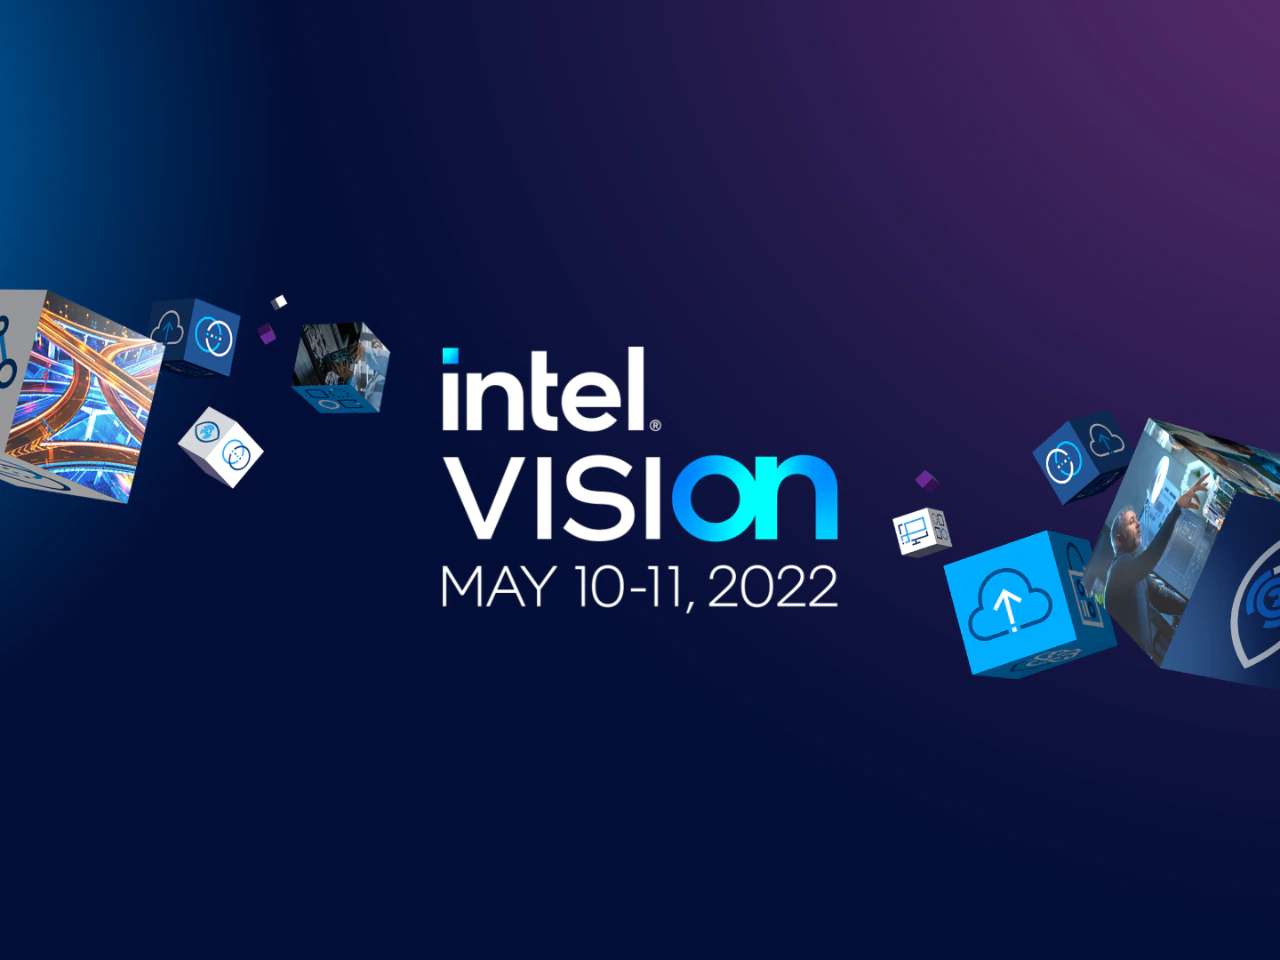 Intel Vision 2022